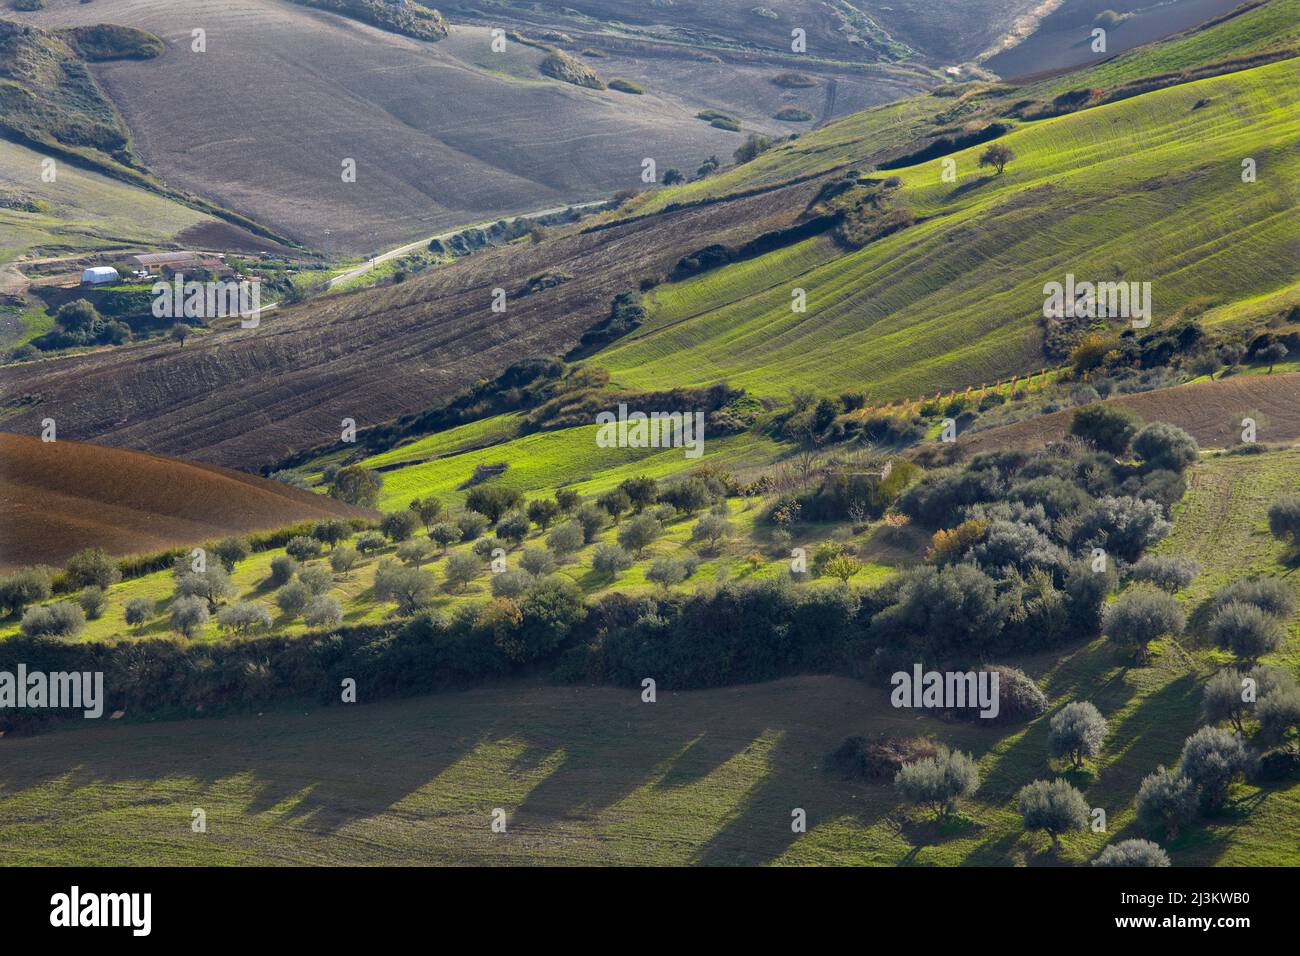 A hilly farmland landscape around Aidone, Sicily, Italy.; Aidone, Sicily, Italy. Stock Photo